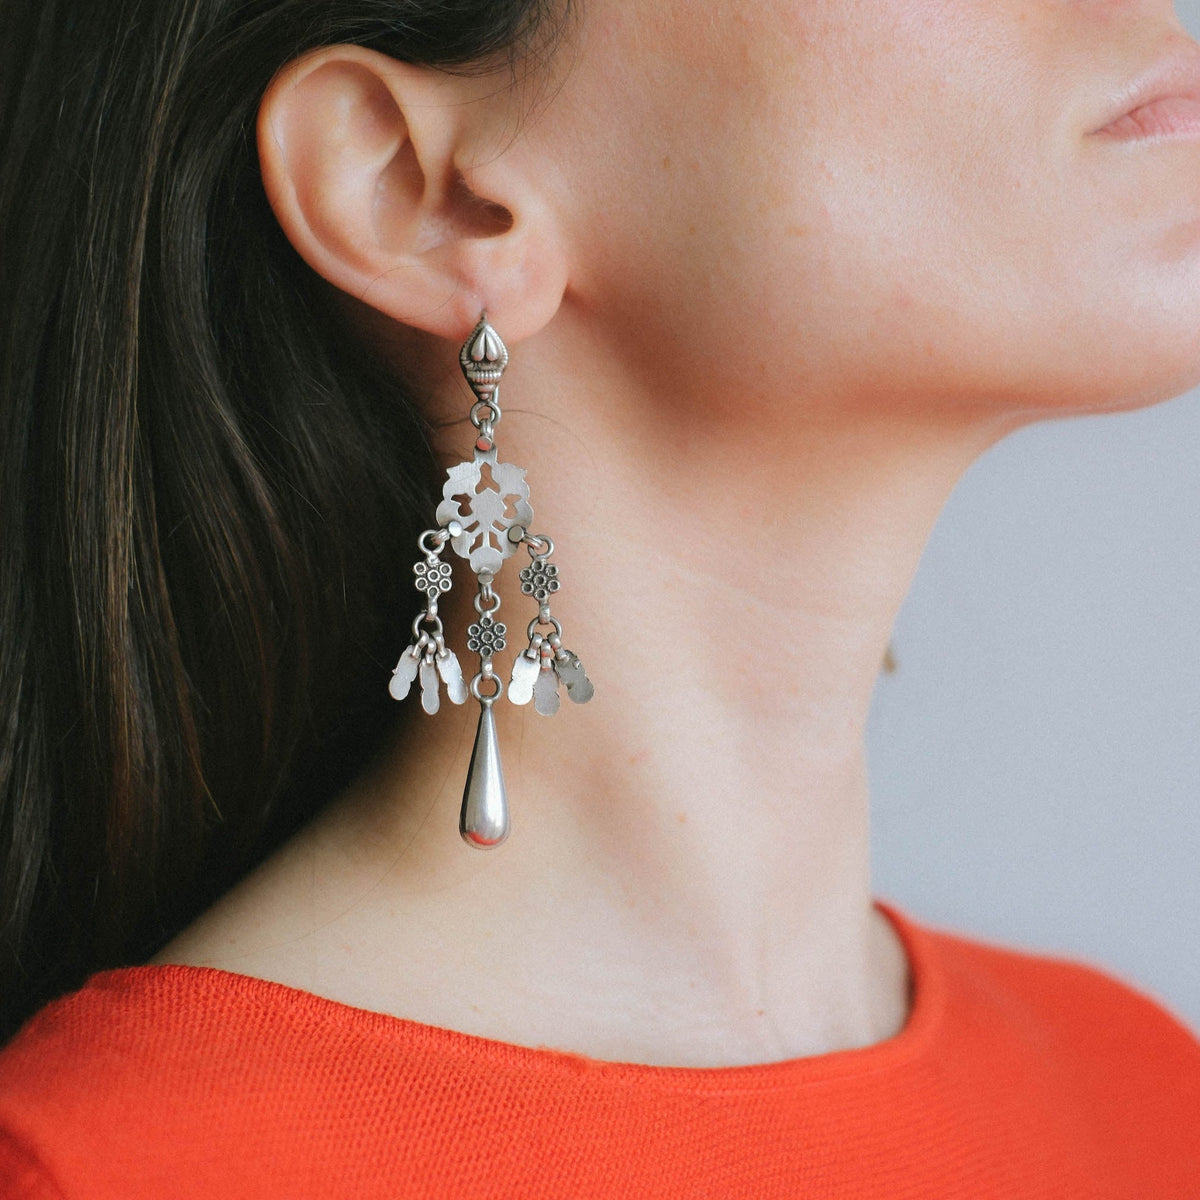 Pendientes artesanales hechos a mano con plata. Longitud 9 cm. Peso 18 g. Hand made silver earrings. Ethnic silver earrings. Lula Máiz